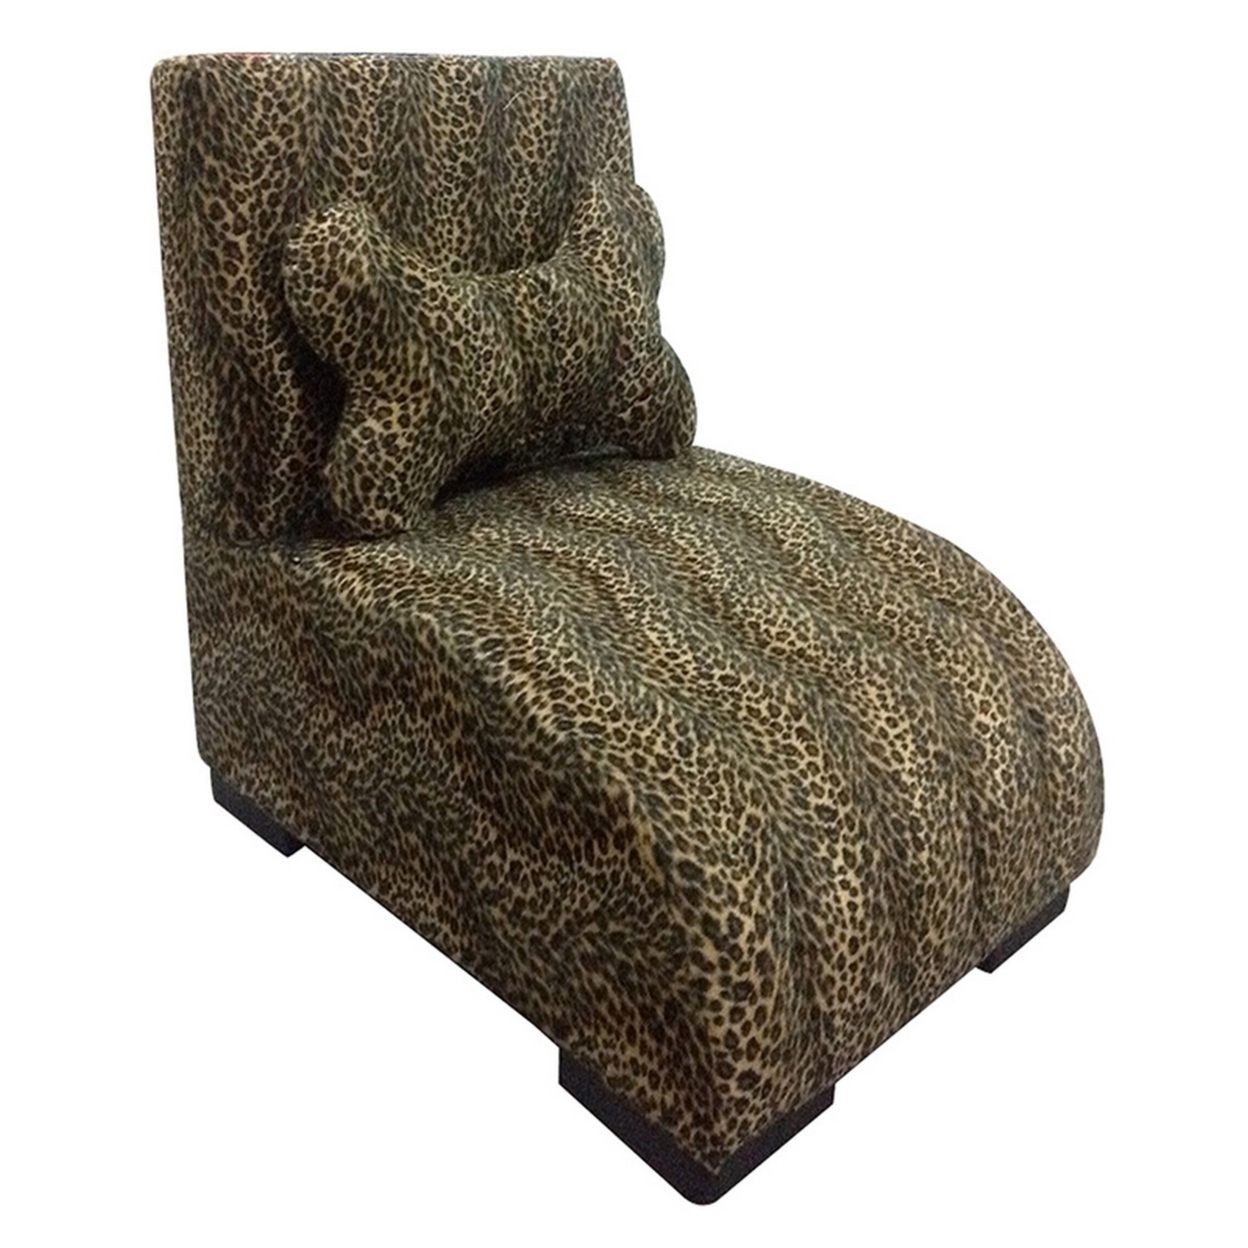 Pet Furniture With Leopard Print Fabric And Block Feet, Black And Yellow- Saltoro Sherpi